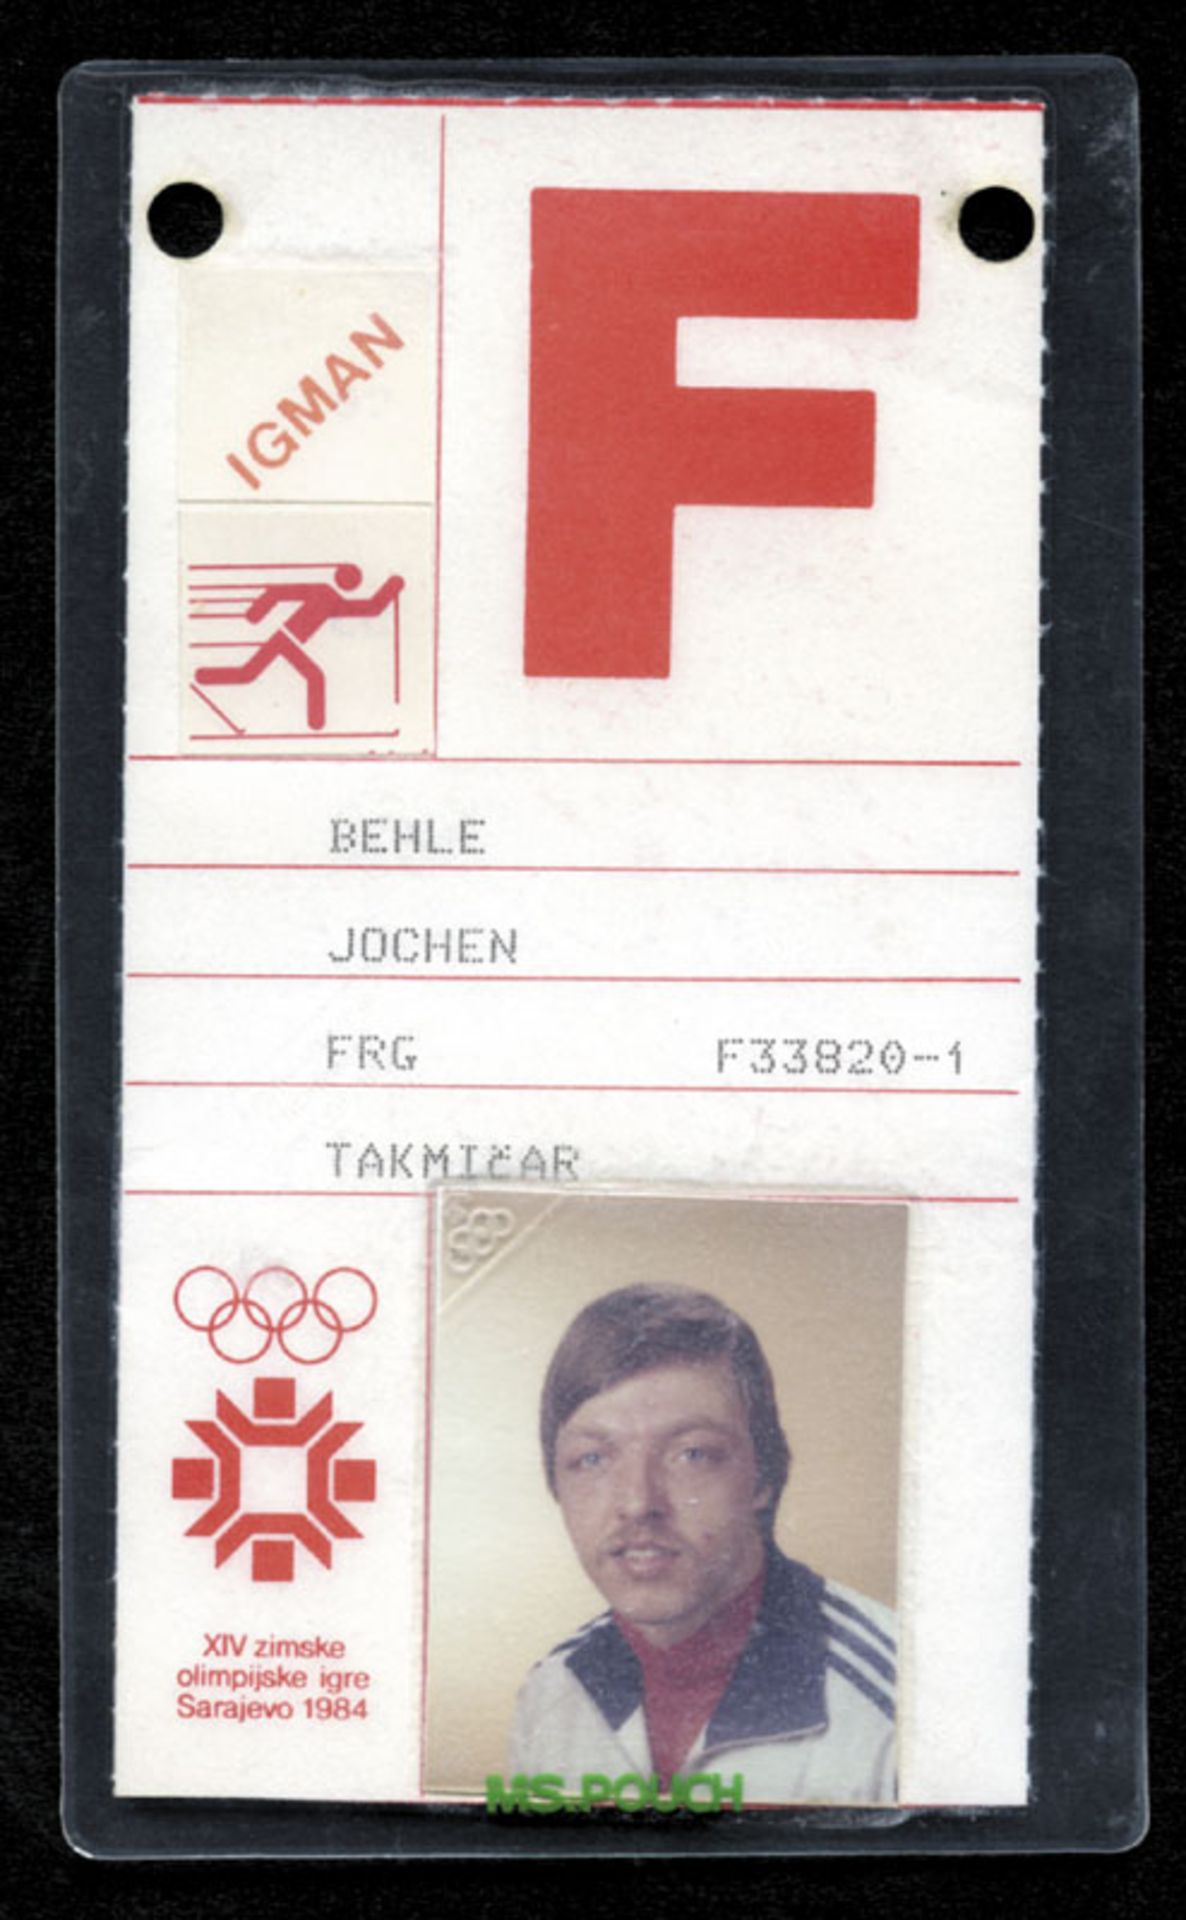 Olympic Winter Games Sarajewo 1984 Identity Card - Original Olympic Games ID card for the Olympic